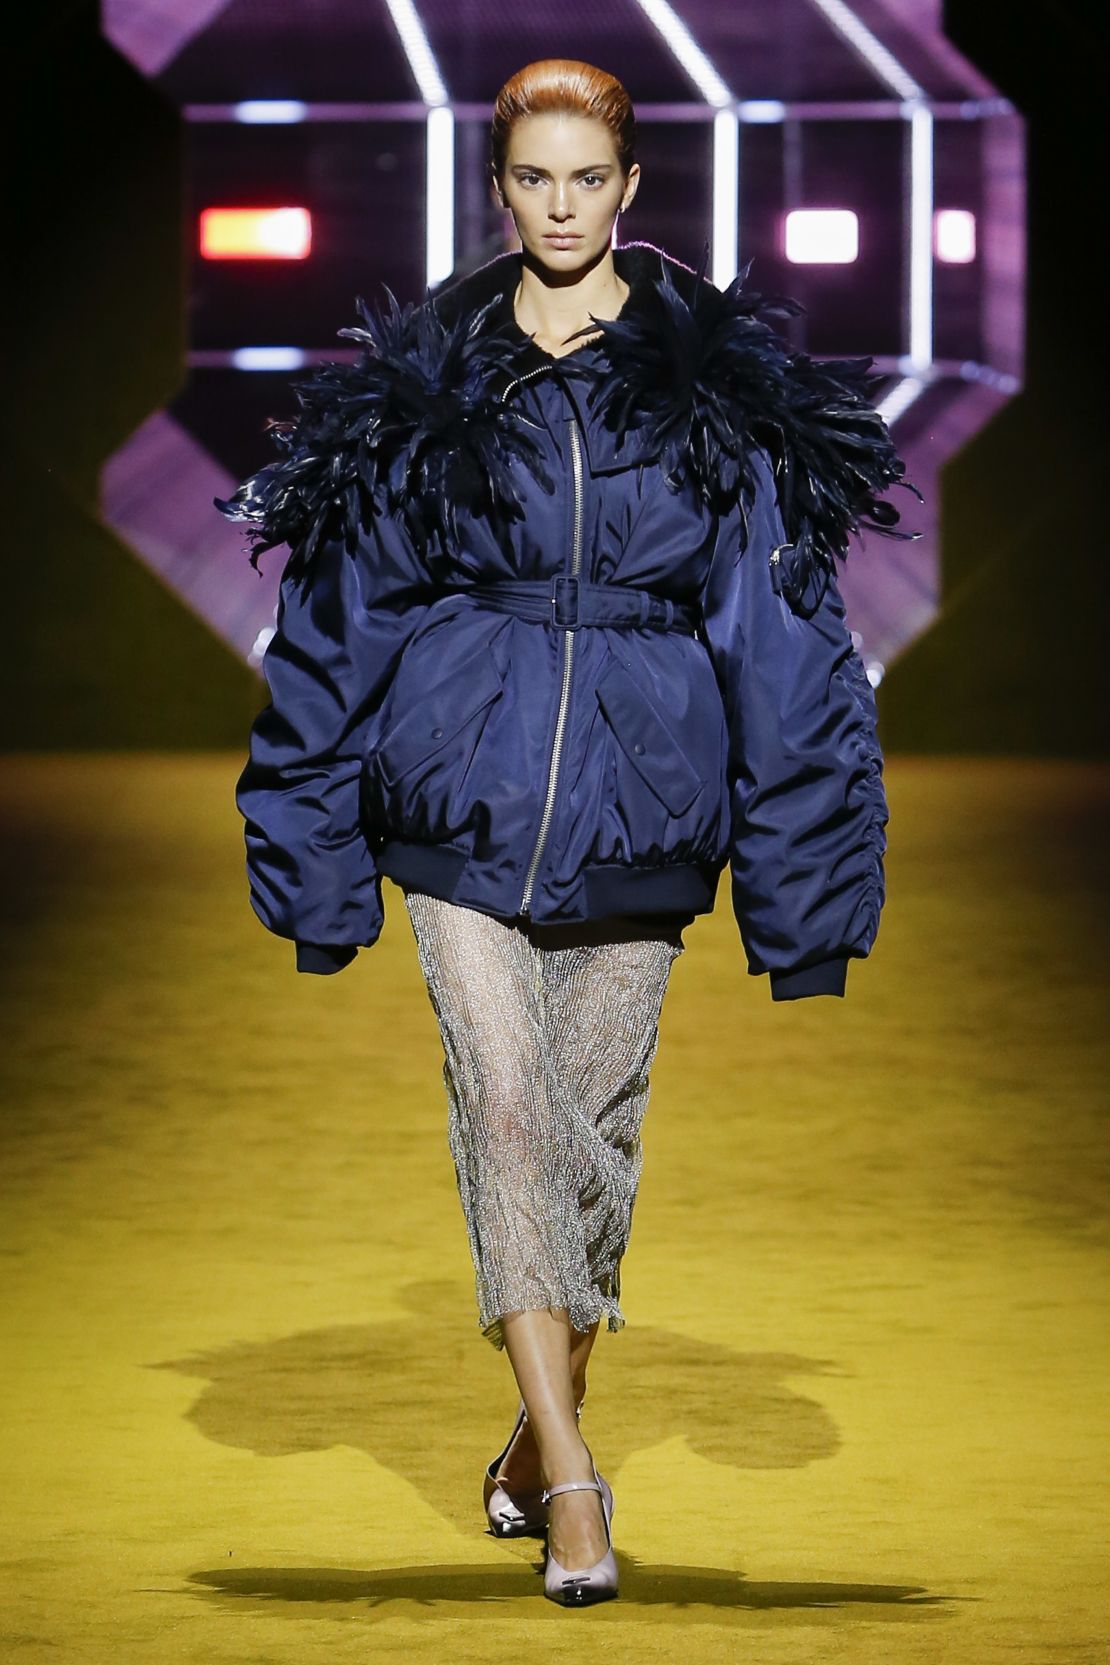 Milan Fashion Week 2022: Rihanna, Kim Kardashian watch the runway